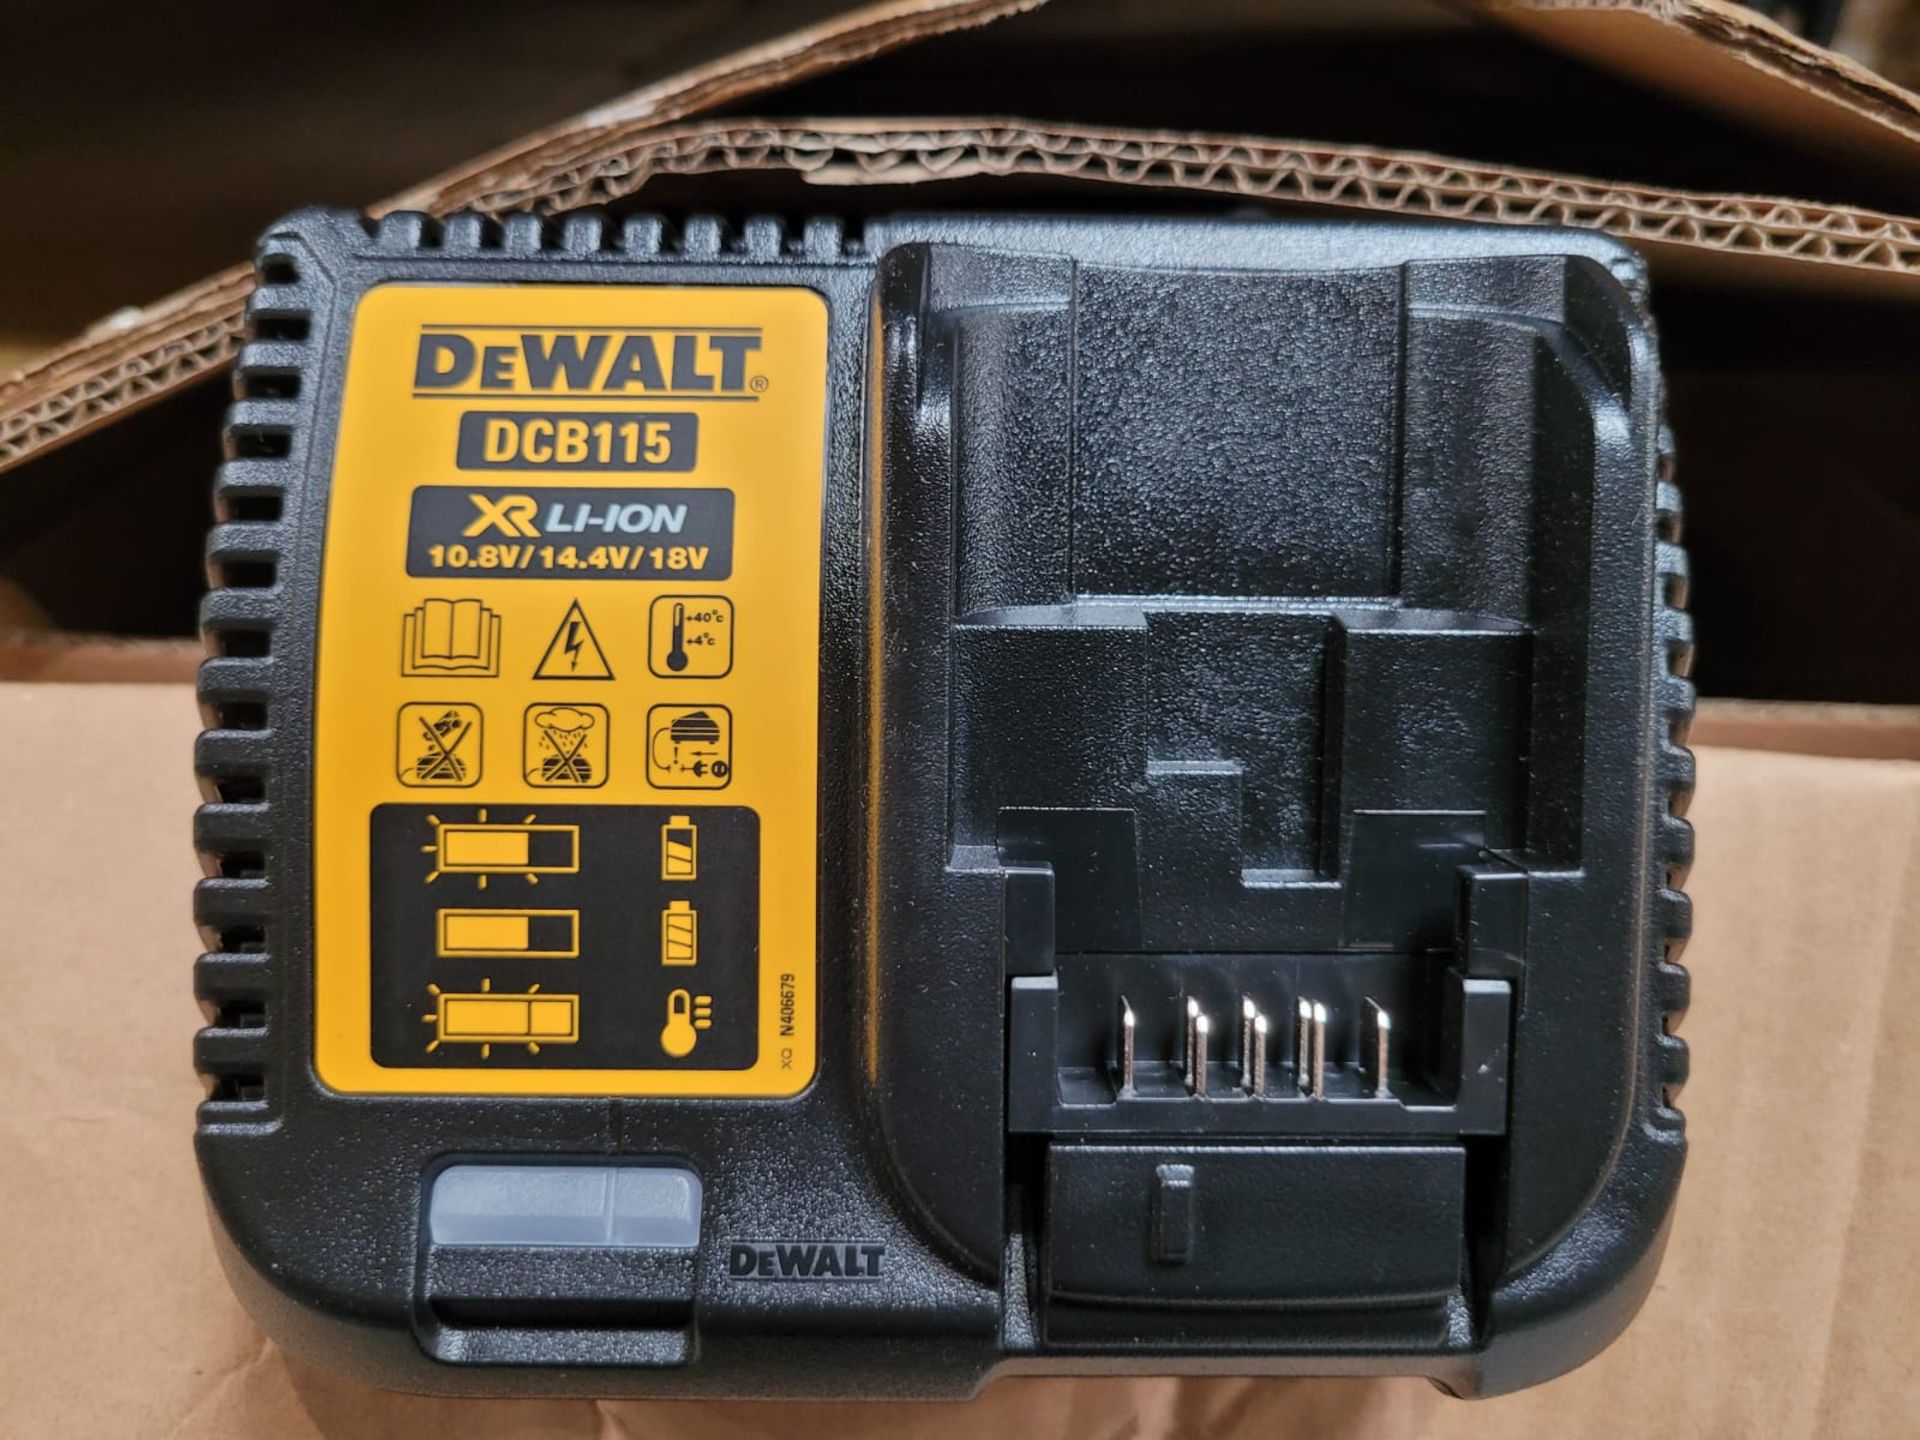 Dewalt charger brand new - Image 4 of 4